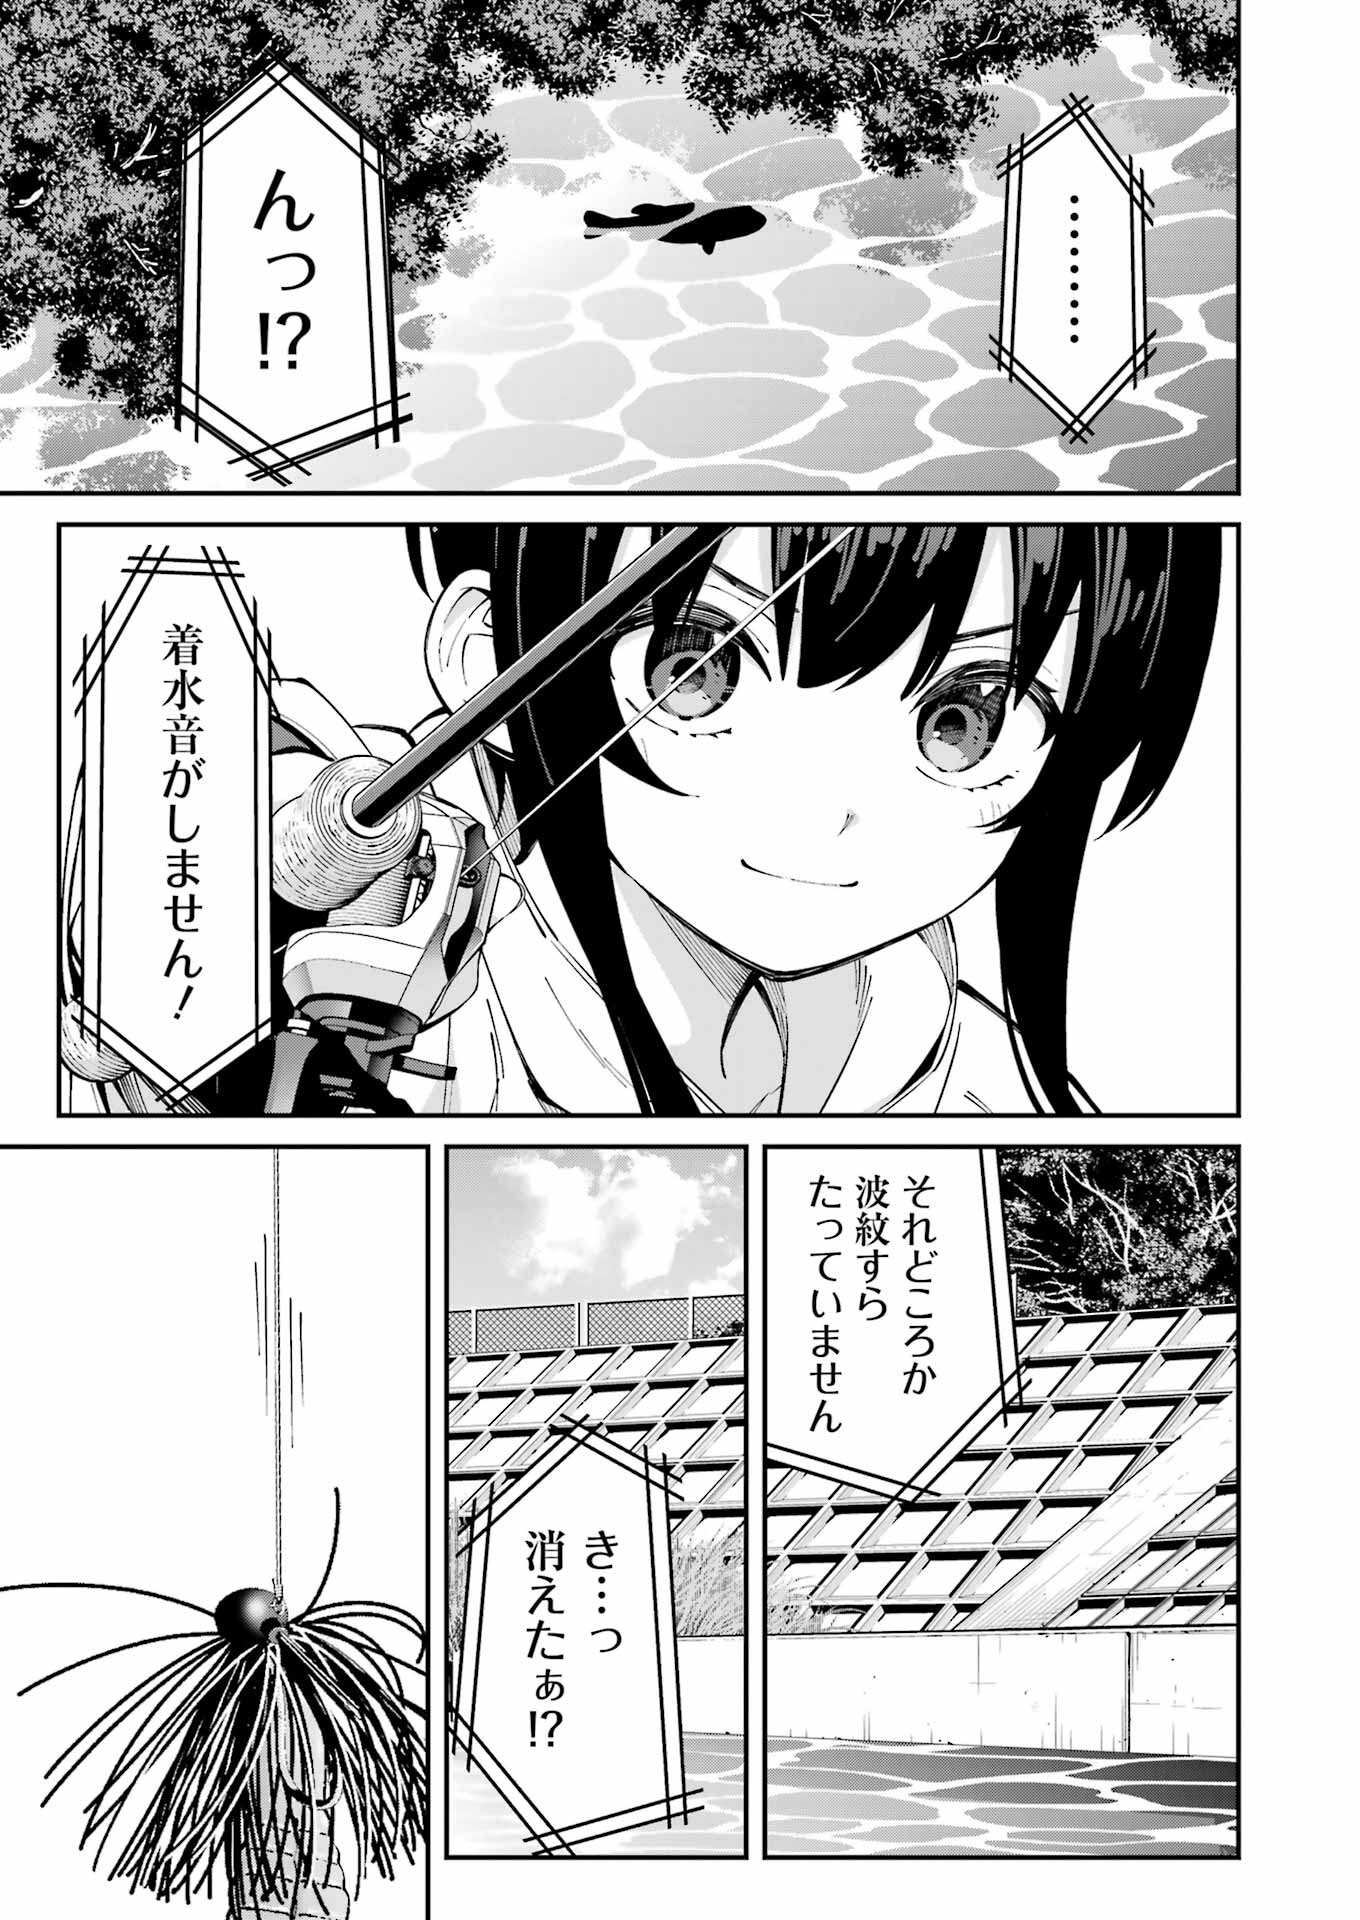 Tsuri Komachi - Chapter 55 - Page 9